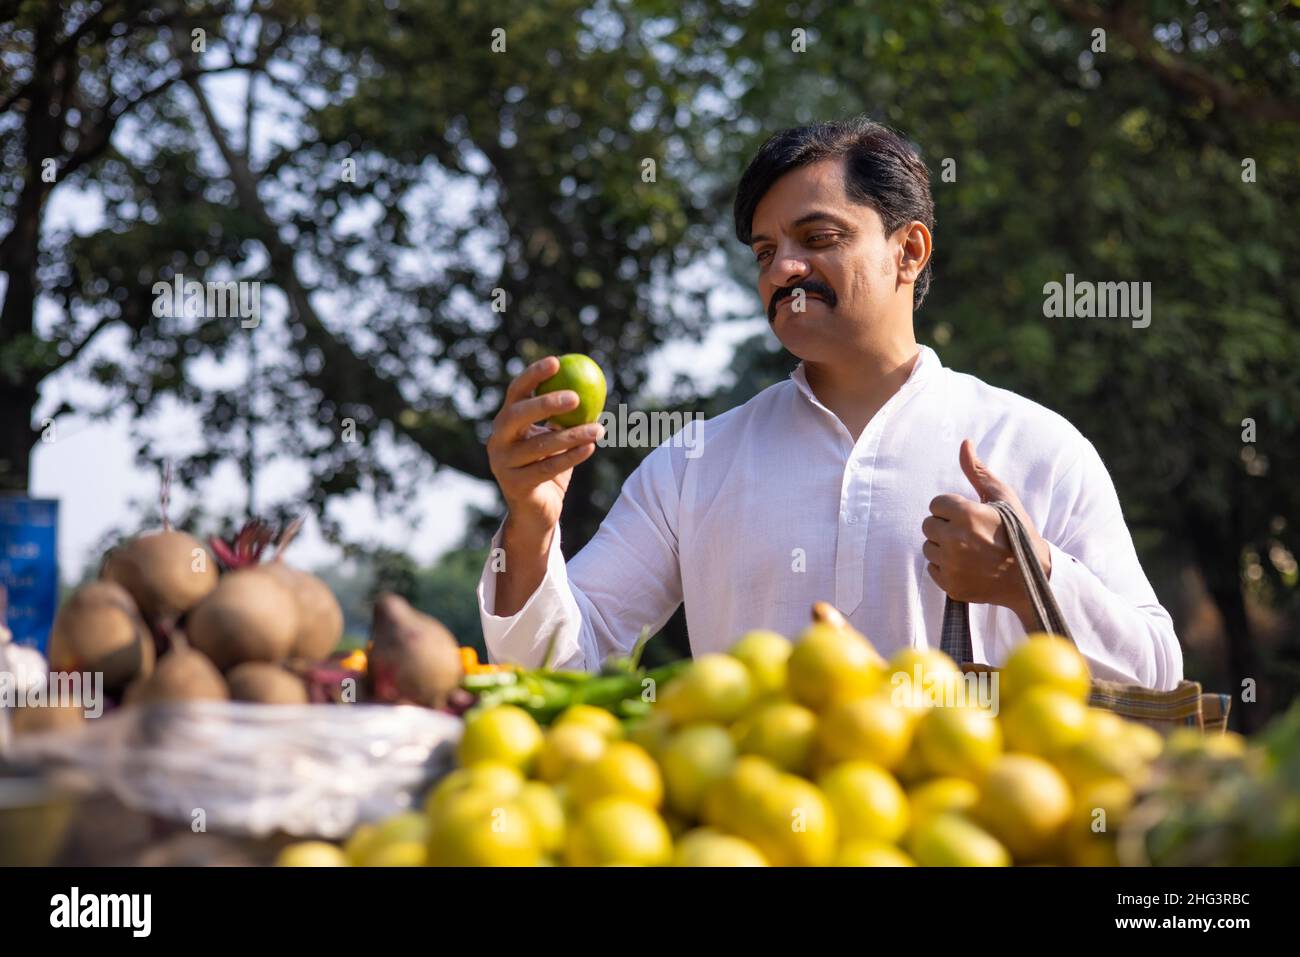 Man in white kurta shopping lemon in market Stock Photo